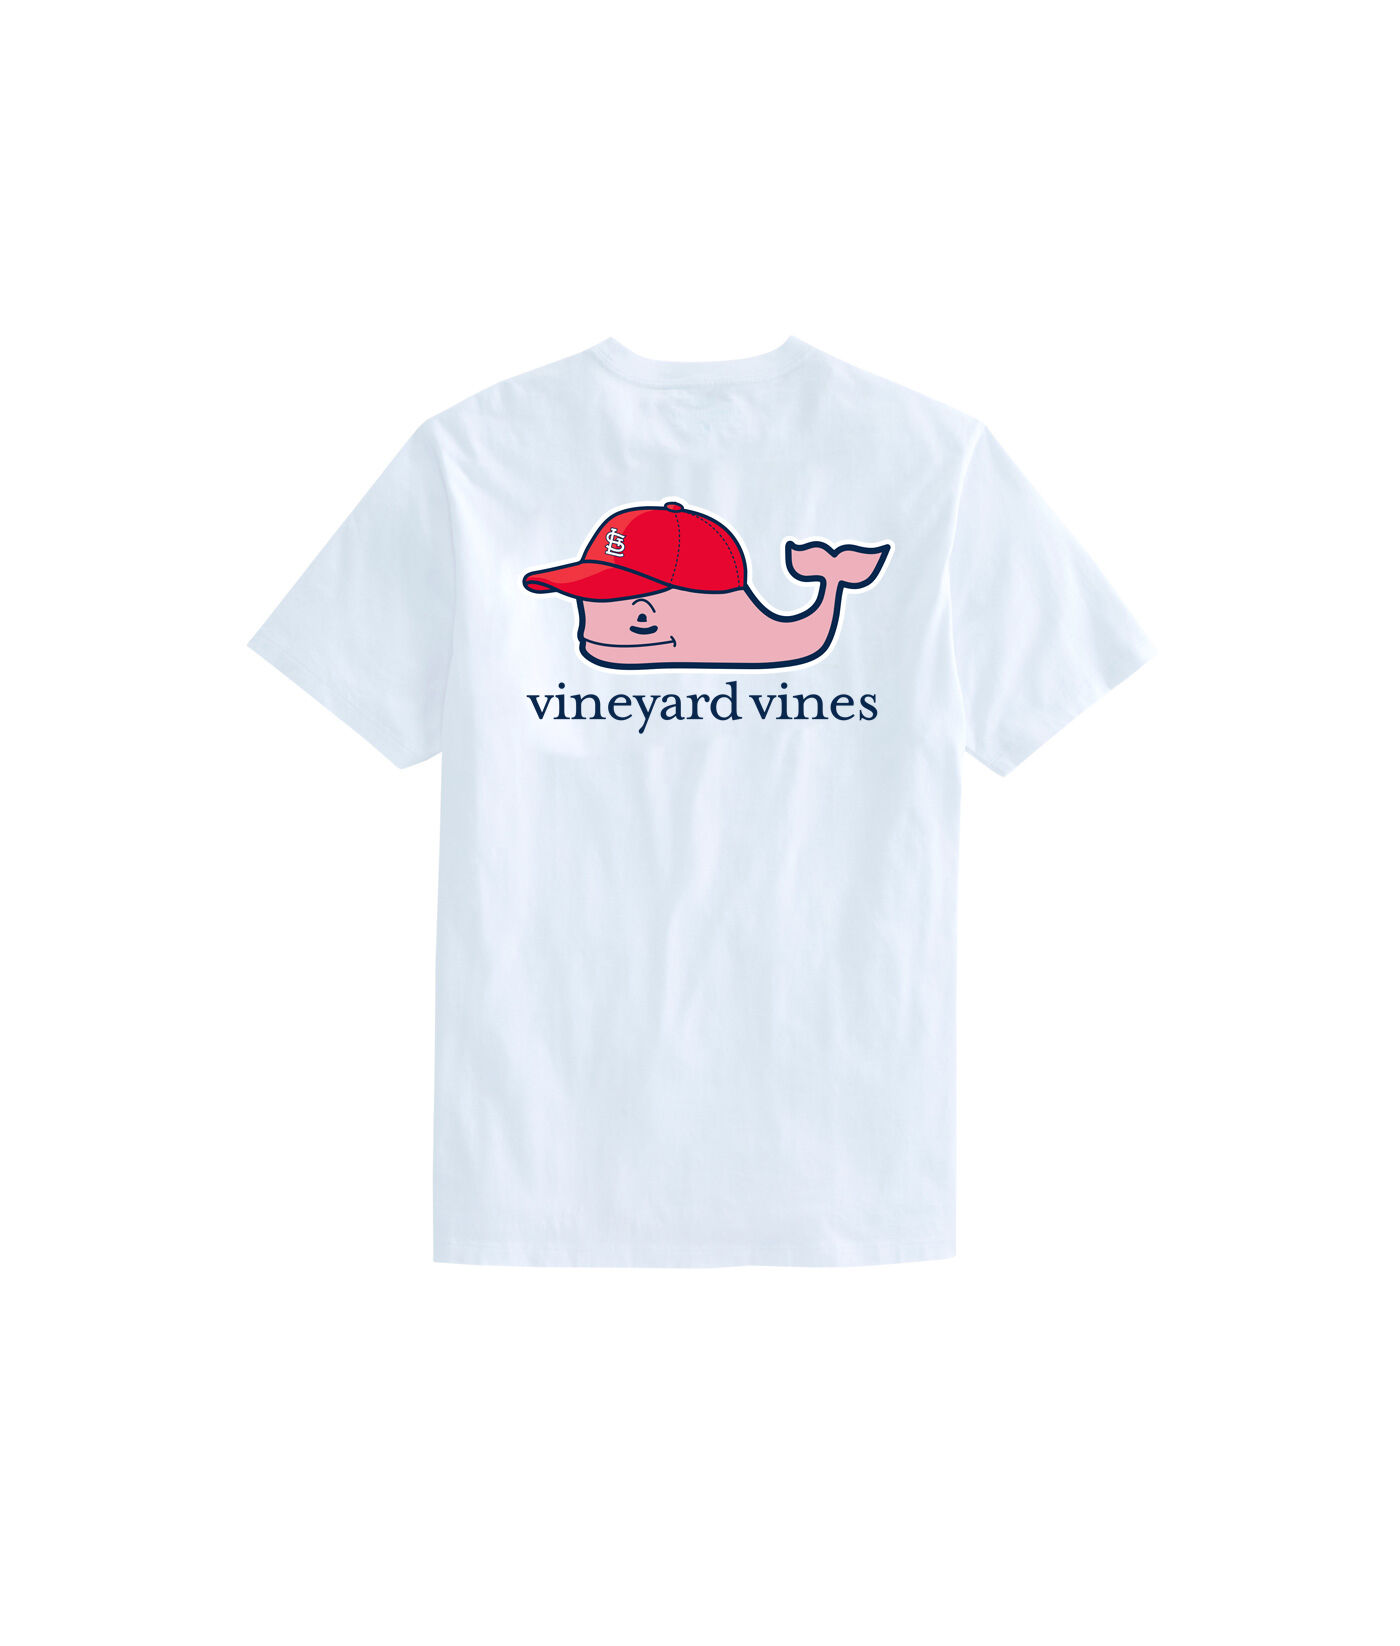 st louis cardinals t shirts on sale